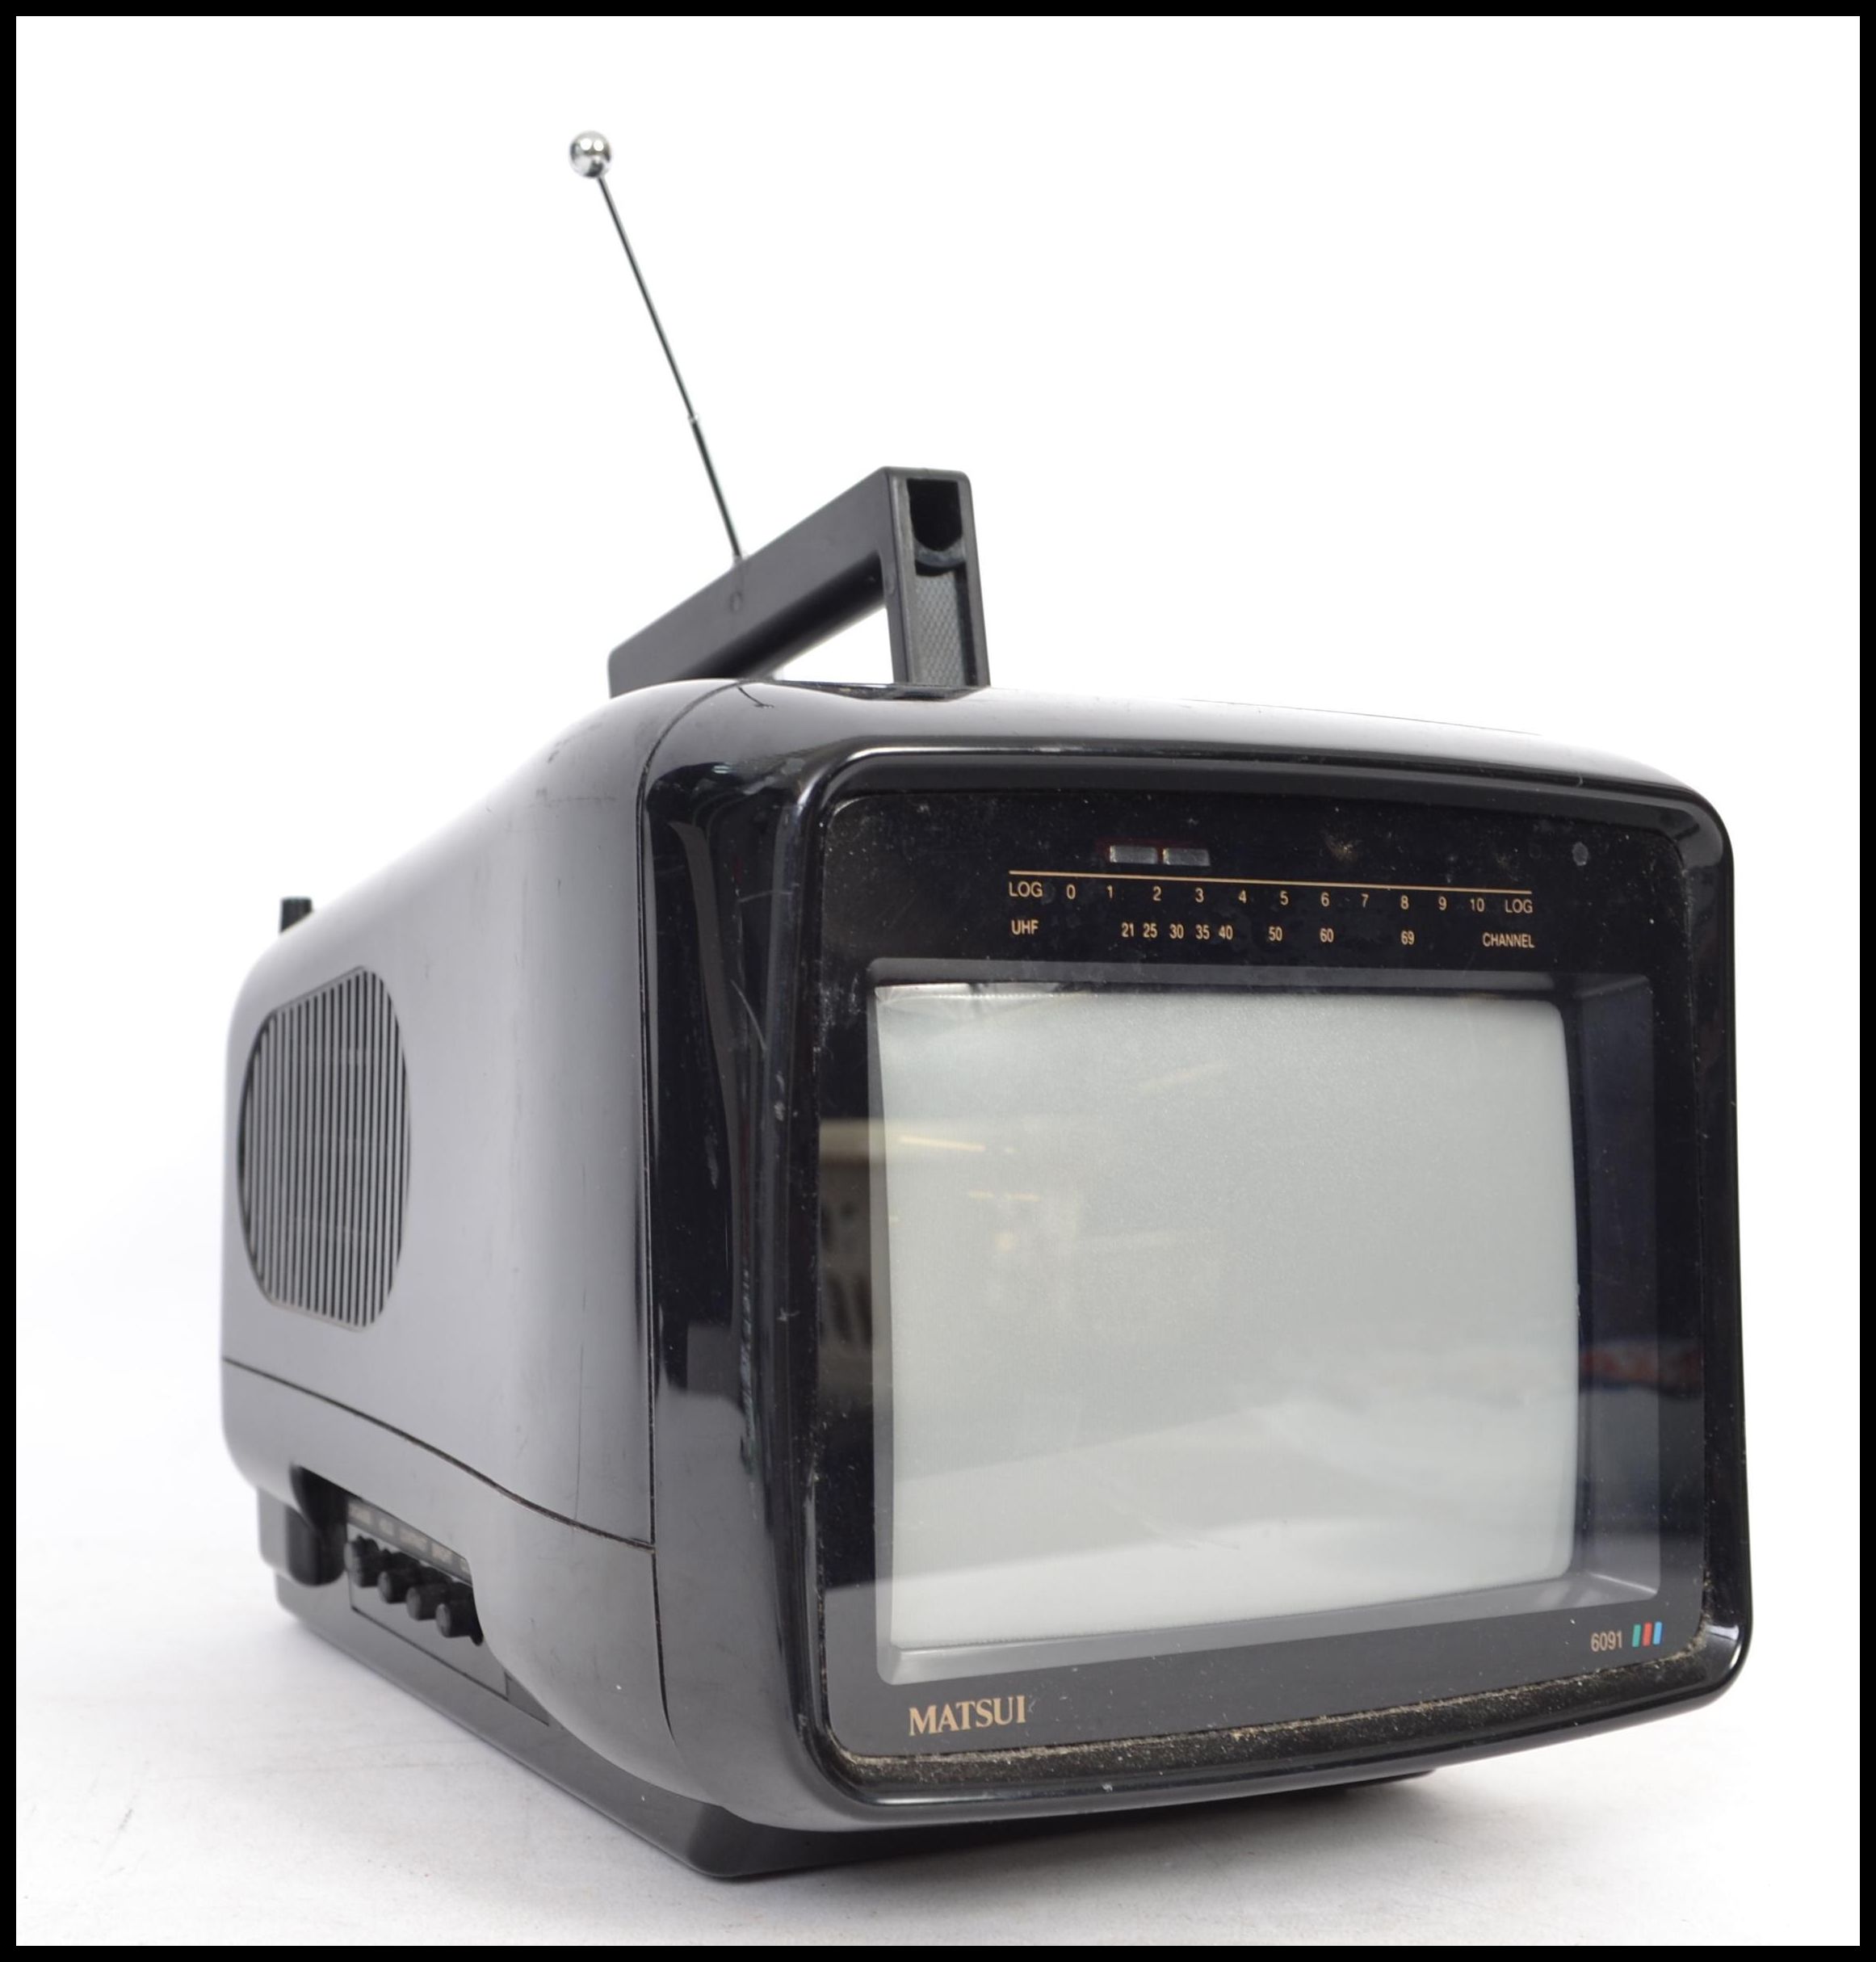 A vintage retro 1980s Matsui portable TV model 609